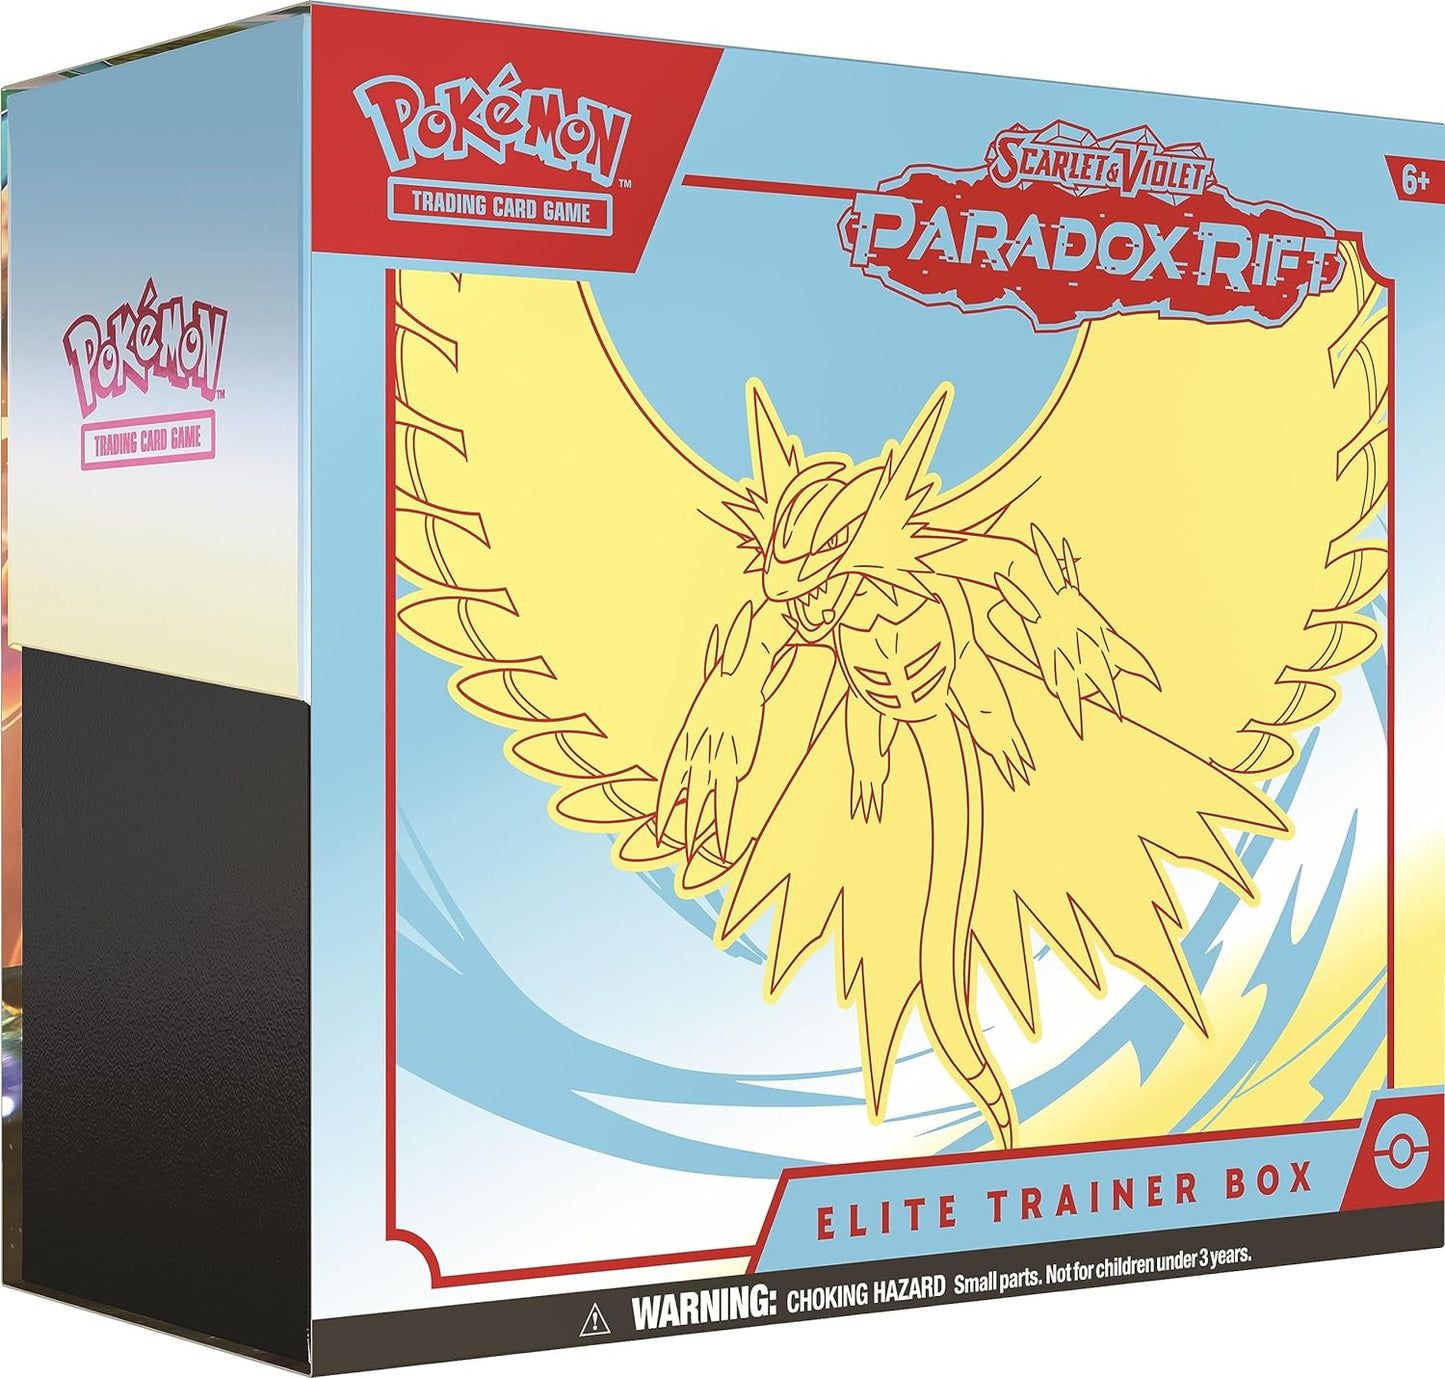 Scarlet and Violet Paradox Rift - Elite Trainer Box